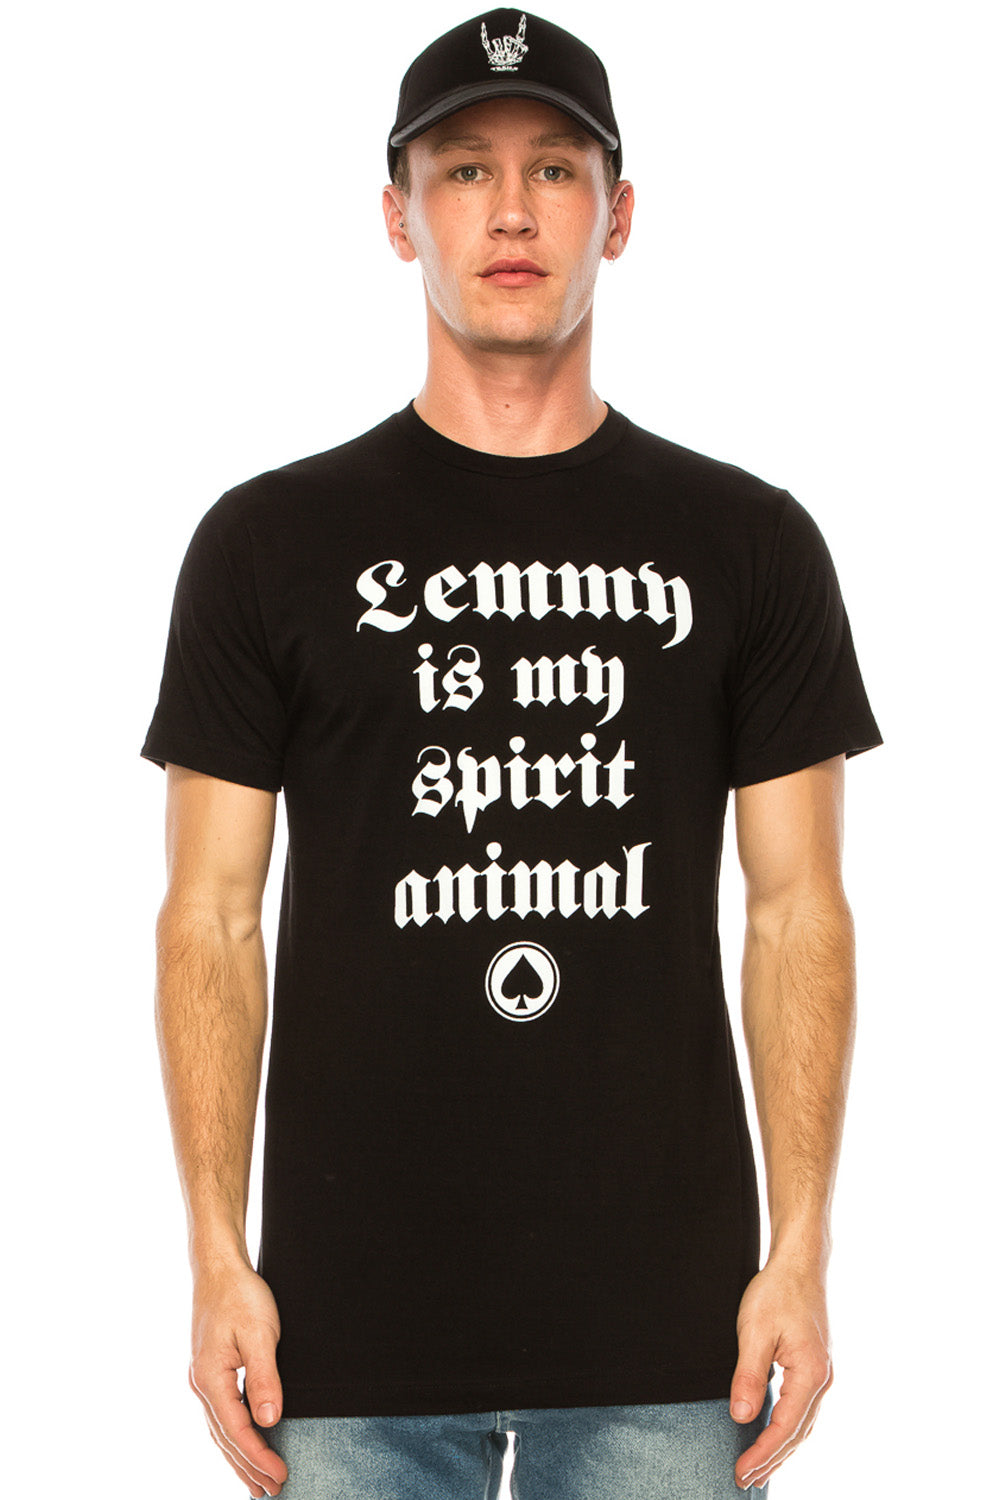 MOTORHEAD LEMMY IS MY SPIRIT ANIMAL MEN'S T-SHIRT - Trailsclothing.com